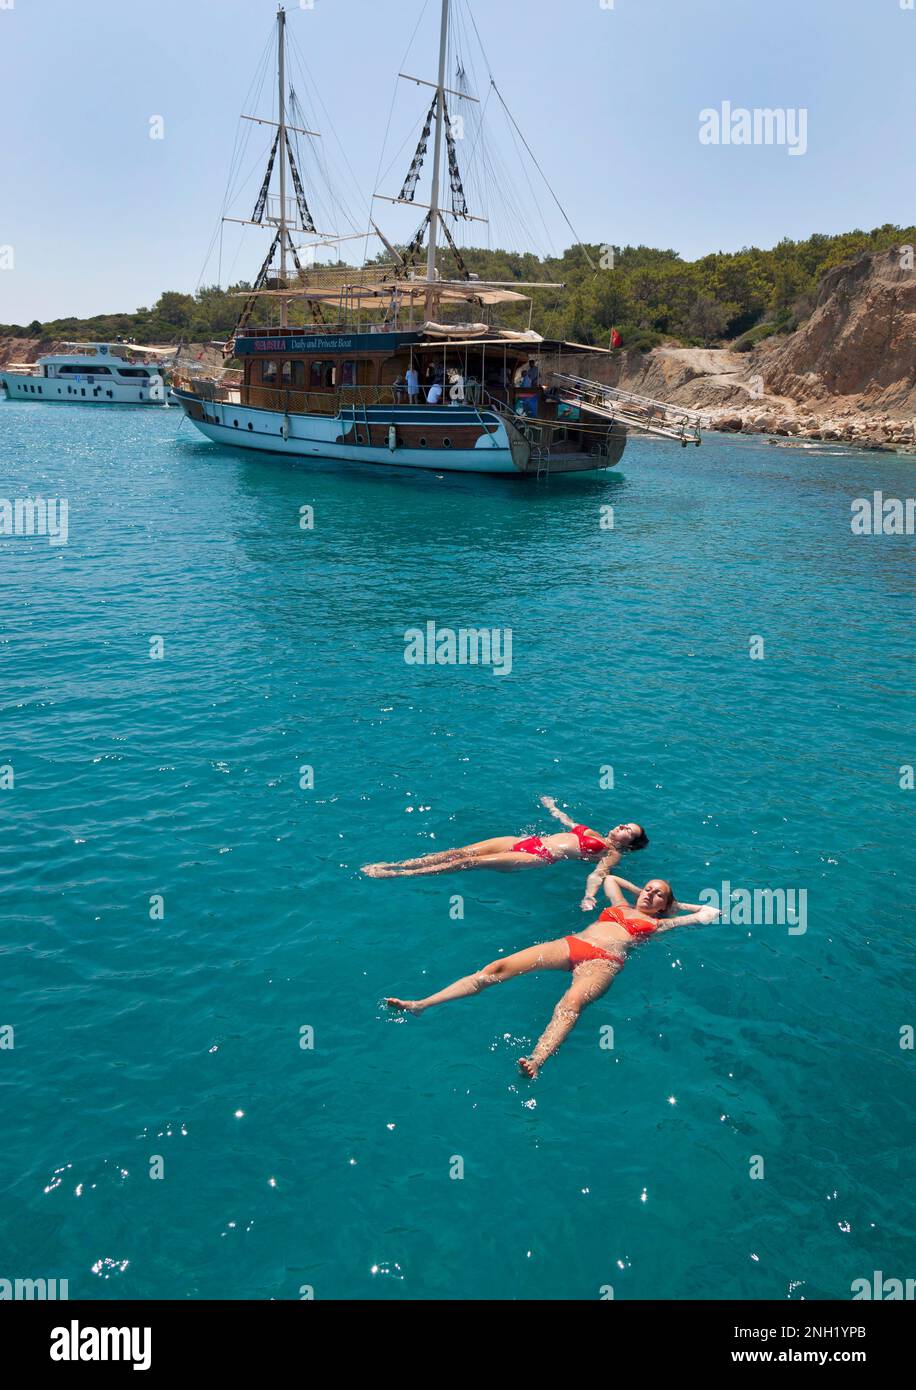 Young women ( model released ) wearing bikini swimwear enjoy a day out aboard a private chartered Gulet sailing in Kalkan bay near to  Kalkan, Turkey. Stock Photo